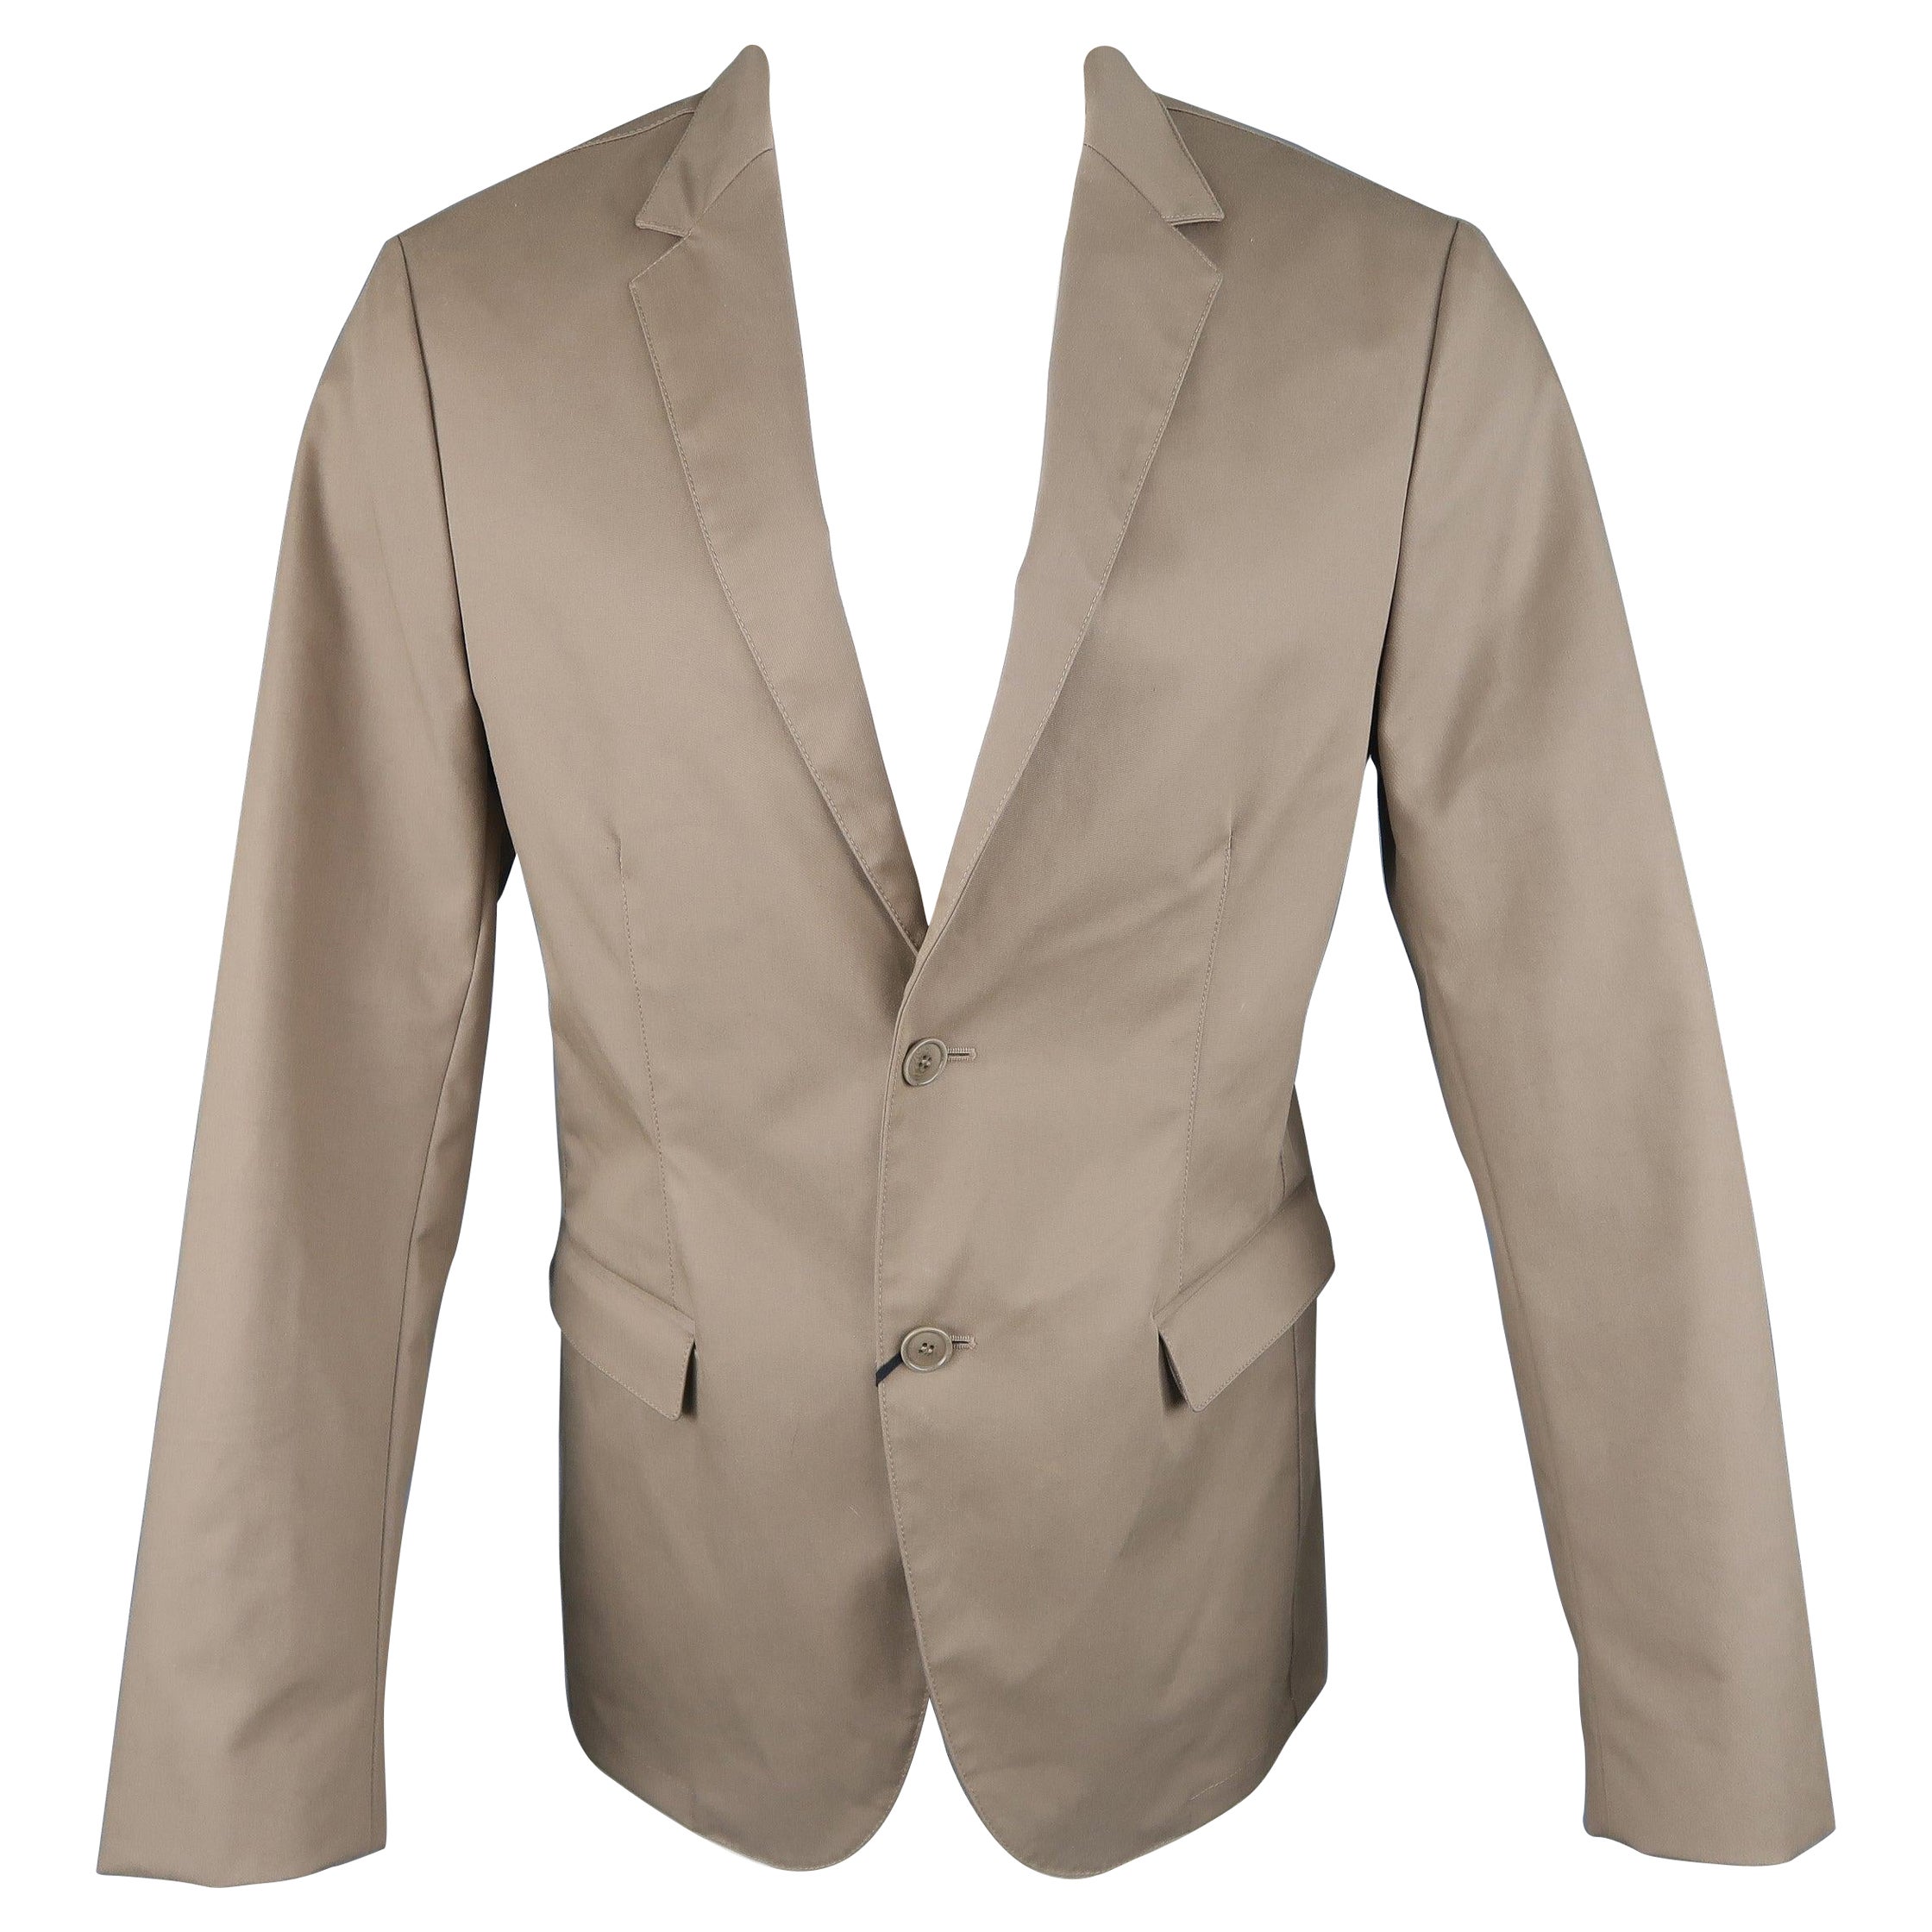 CALVIN KLEIN COLLECTION 38 Taupe Cotton Blend Notch Lapel Sport Coat Jacket For Sale